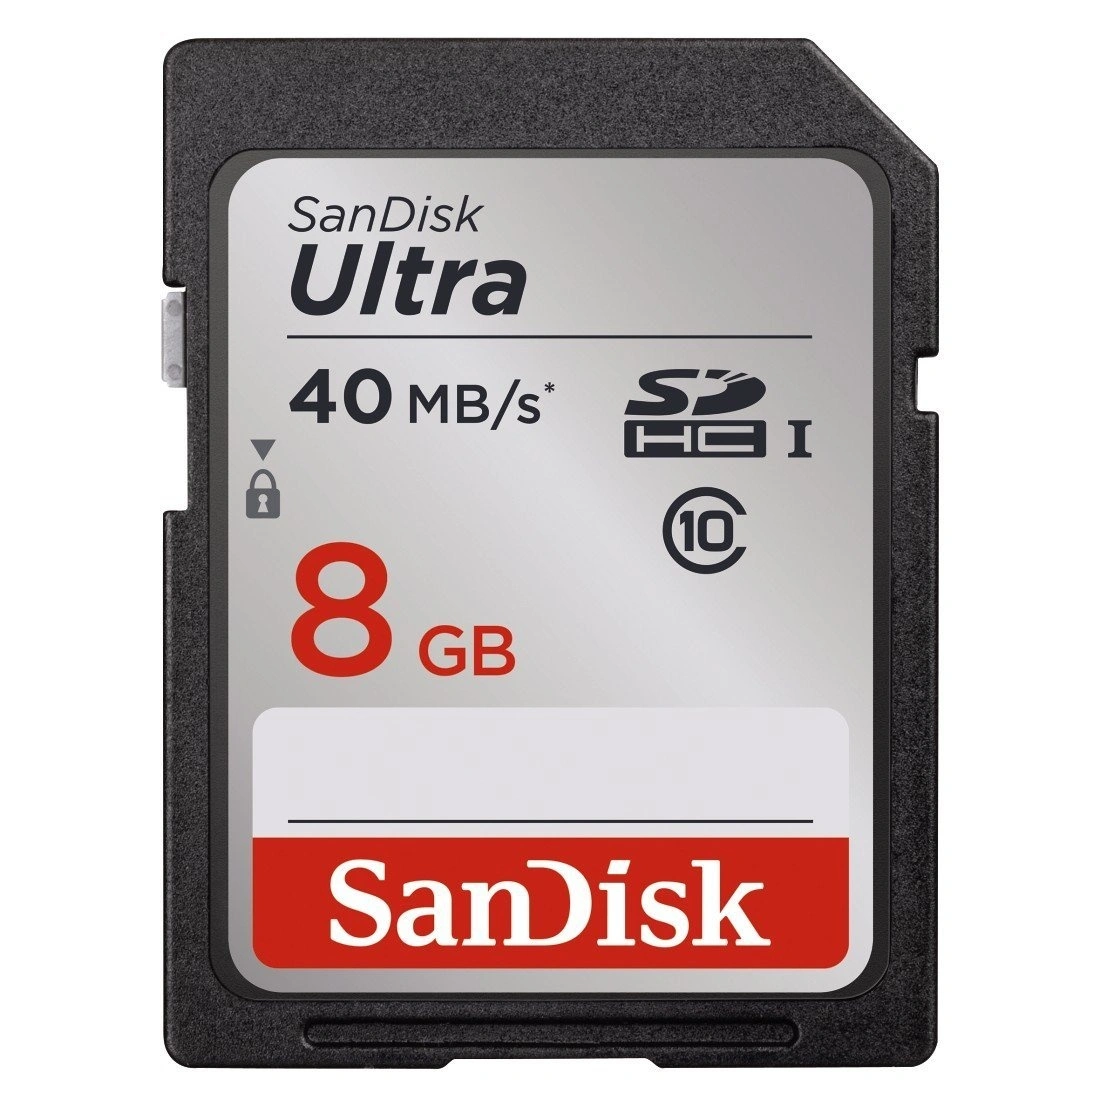 Sandisk 8GB Ultra SD Card 266x